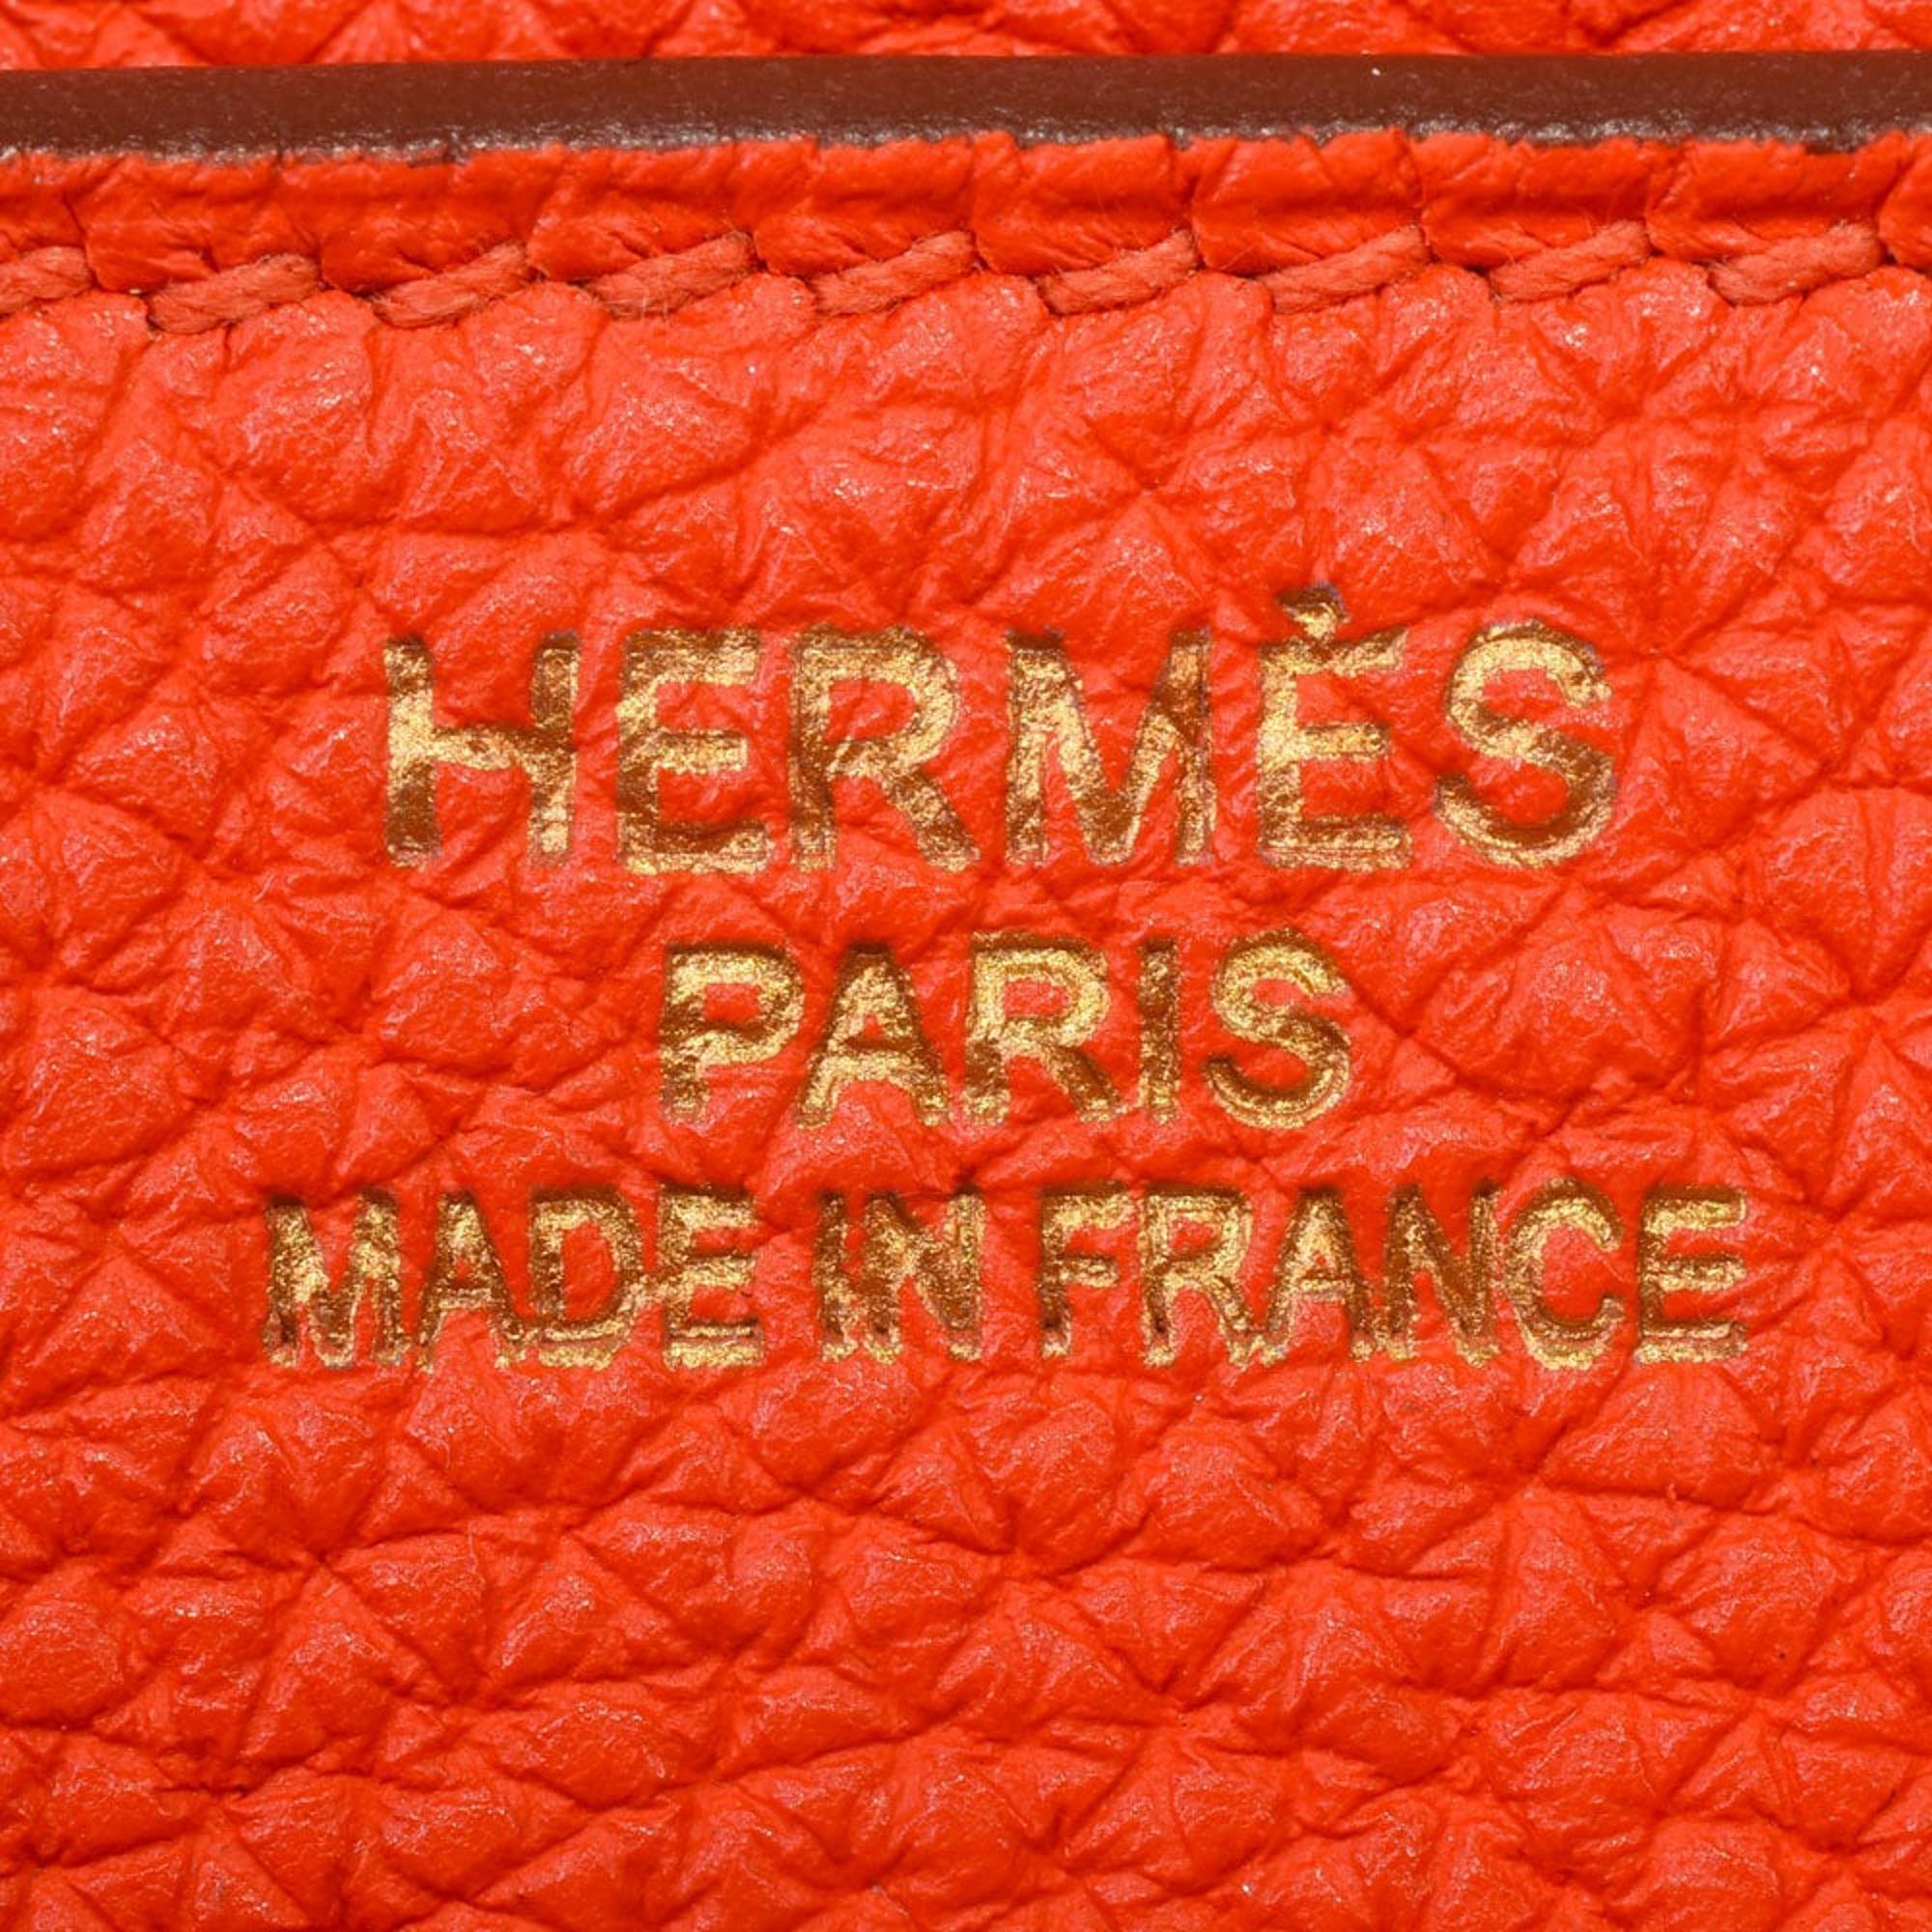 Hermes Birkin 35 Sanguine Togo (manufactured Around 2012) Handbag